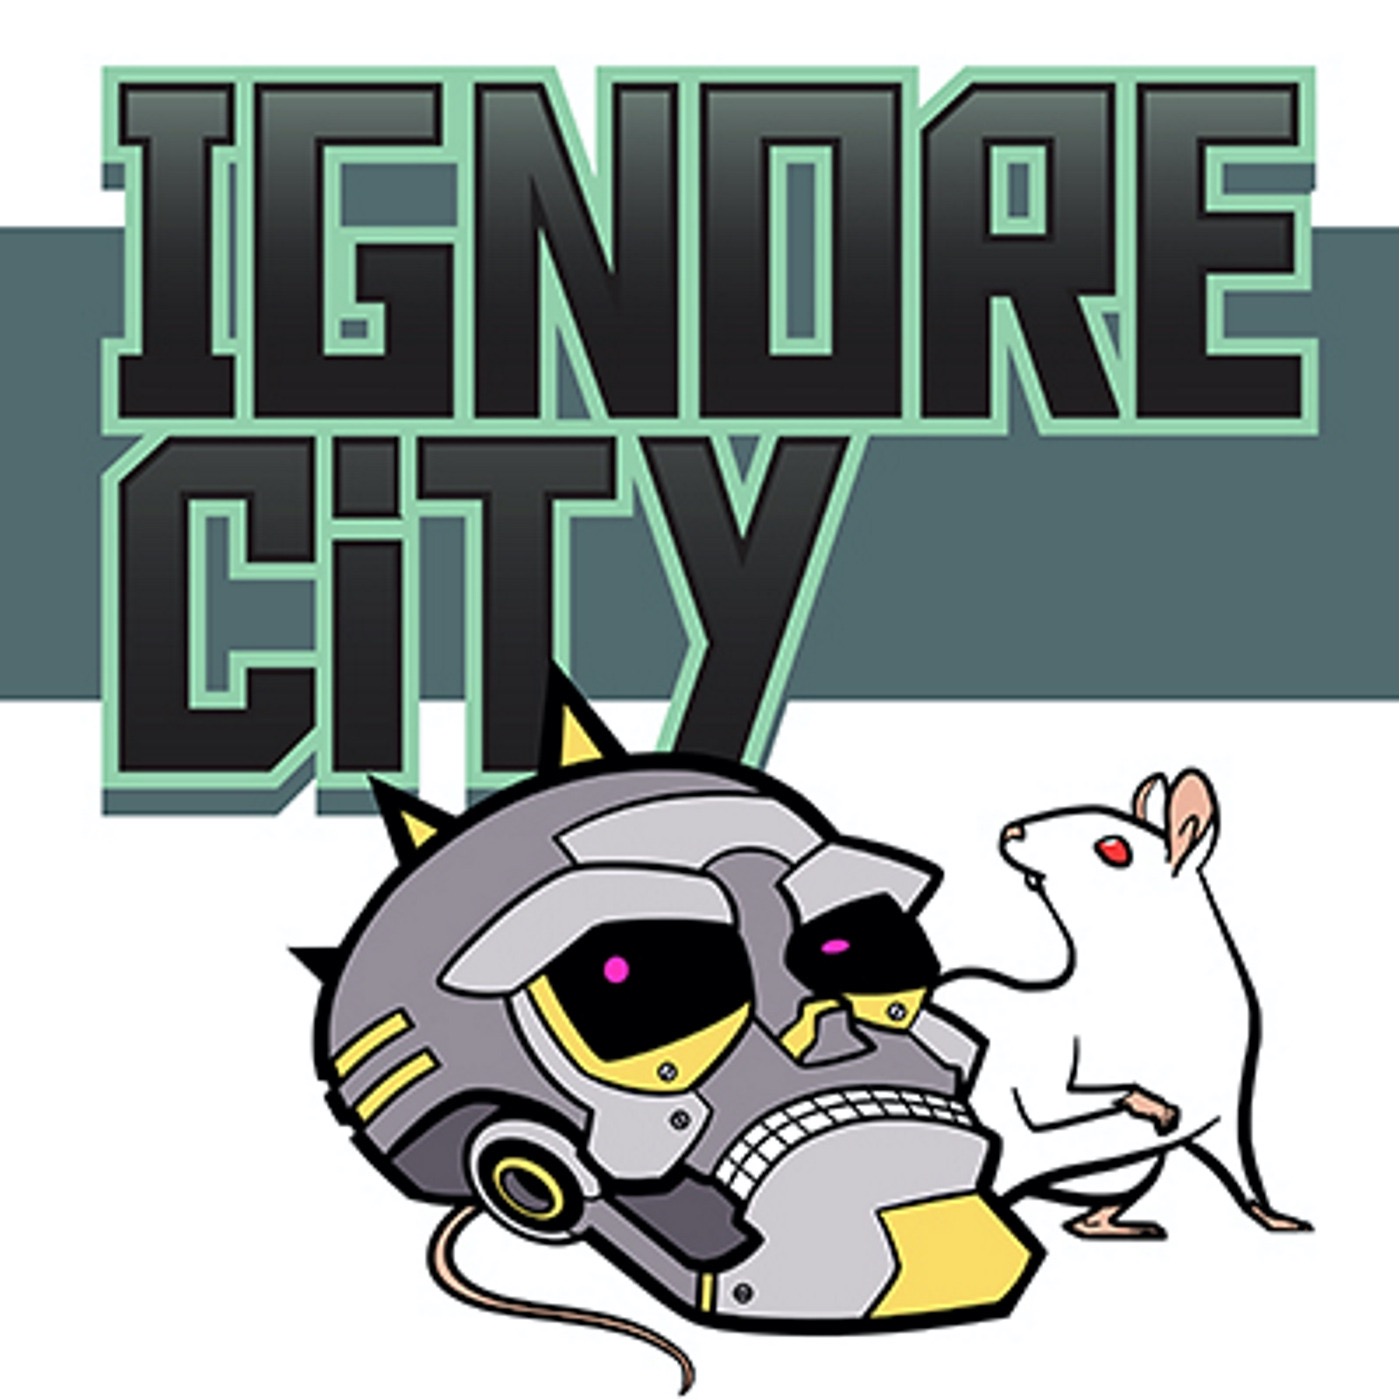 Ignore City 6: The Great Nanoo Nanoo